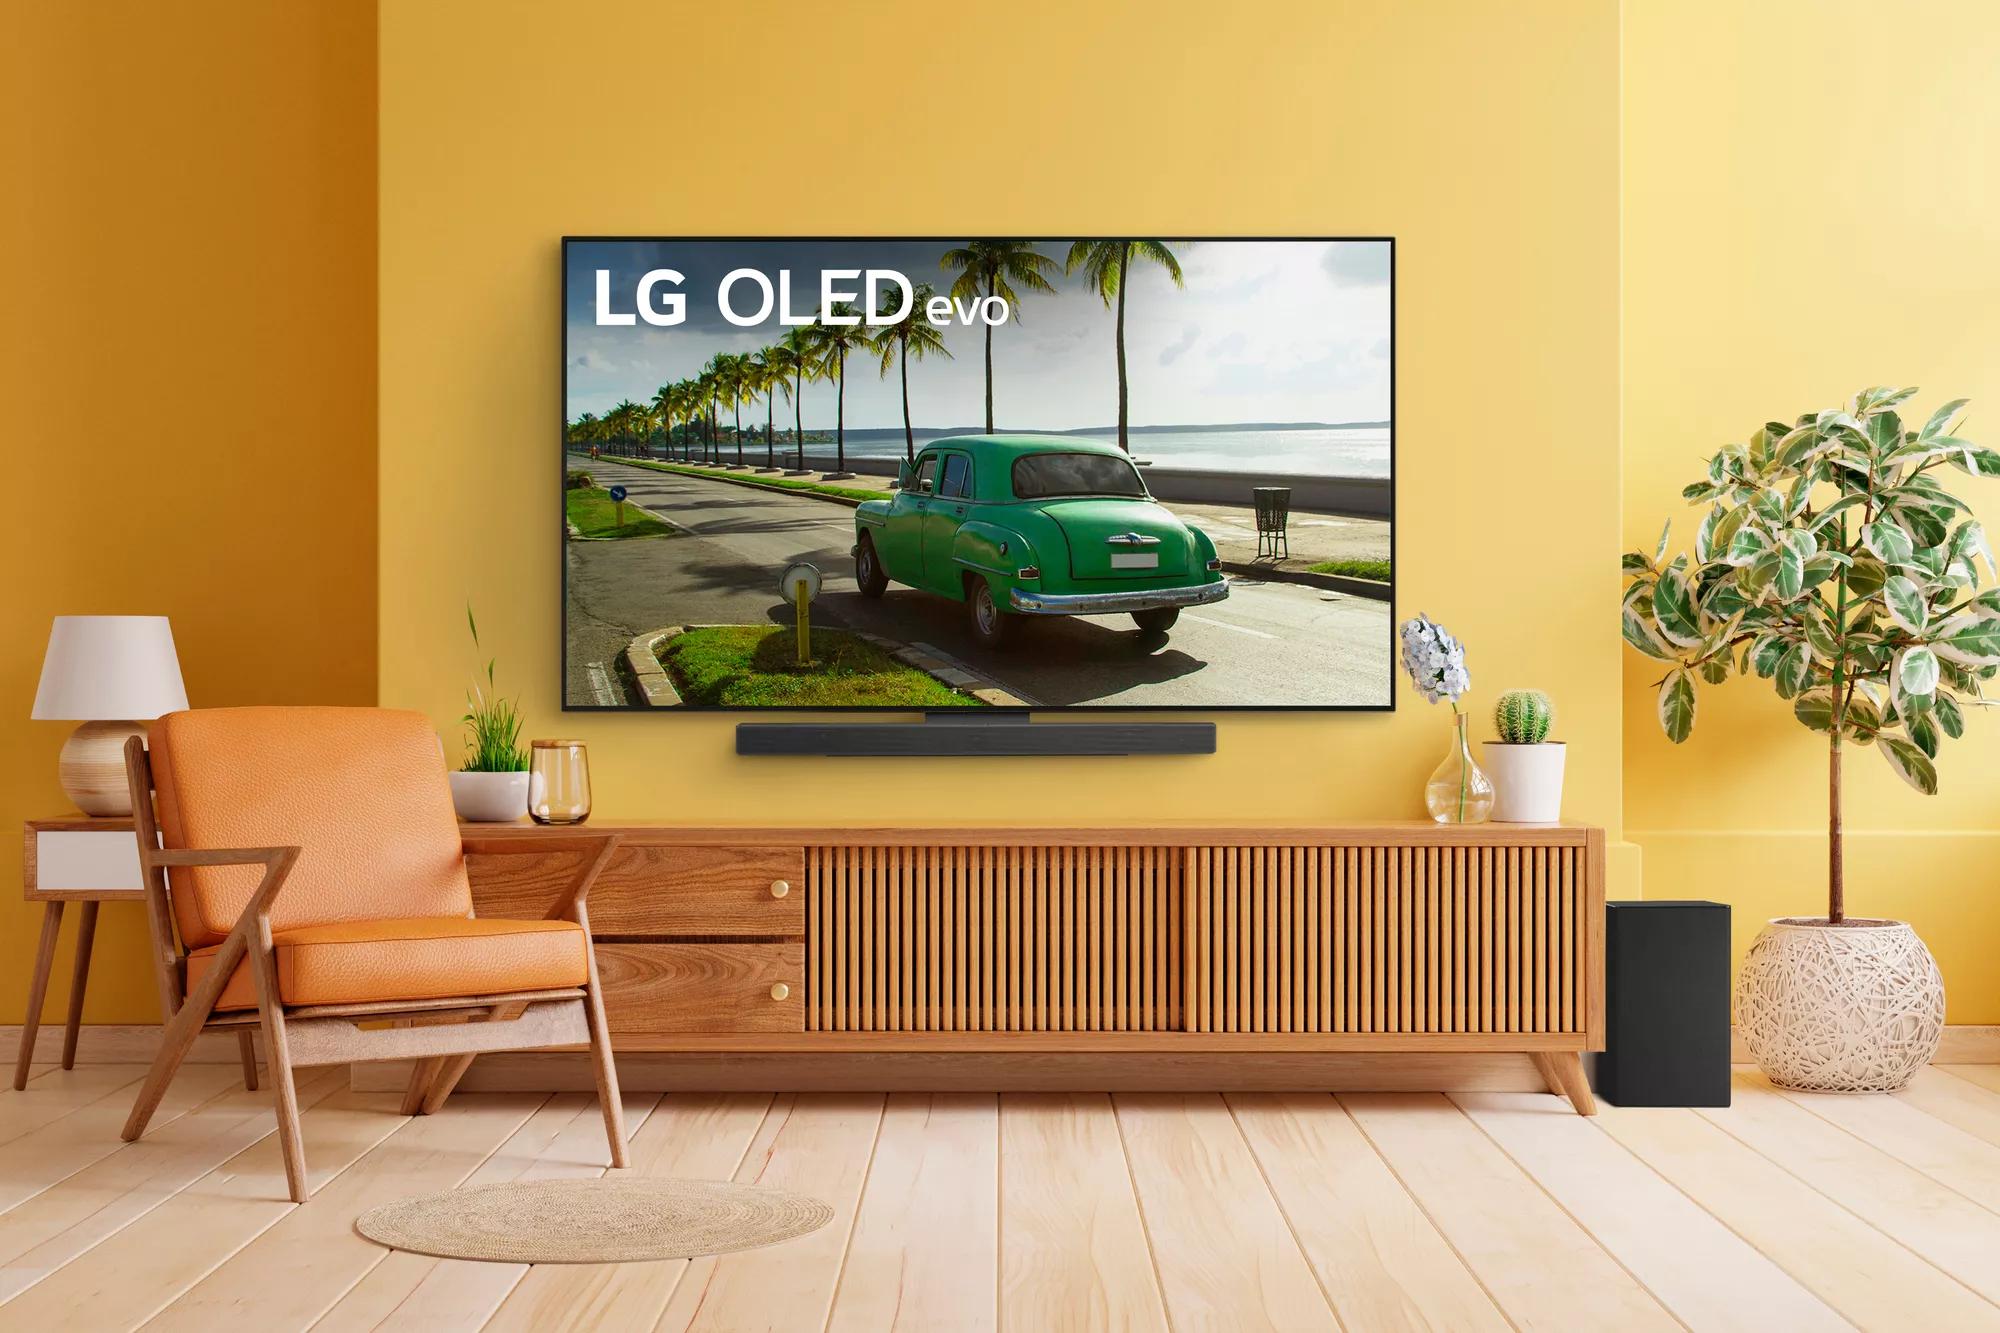 LG SC9S Soundbar with LG OLED evo Series C TV Mounted on Yellow Wall